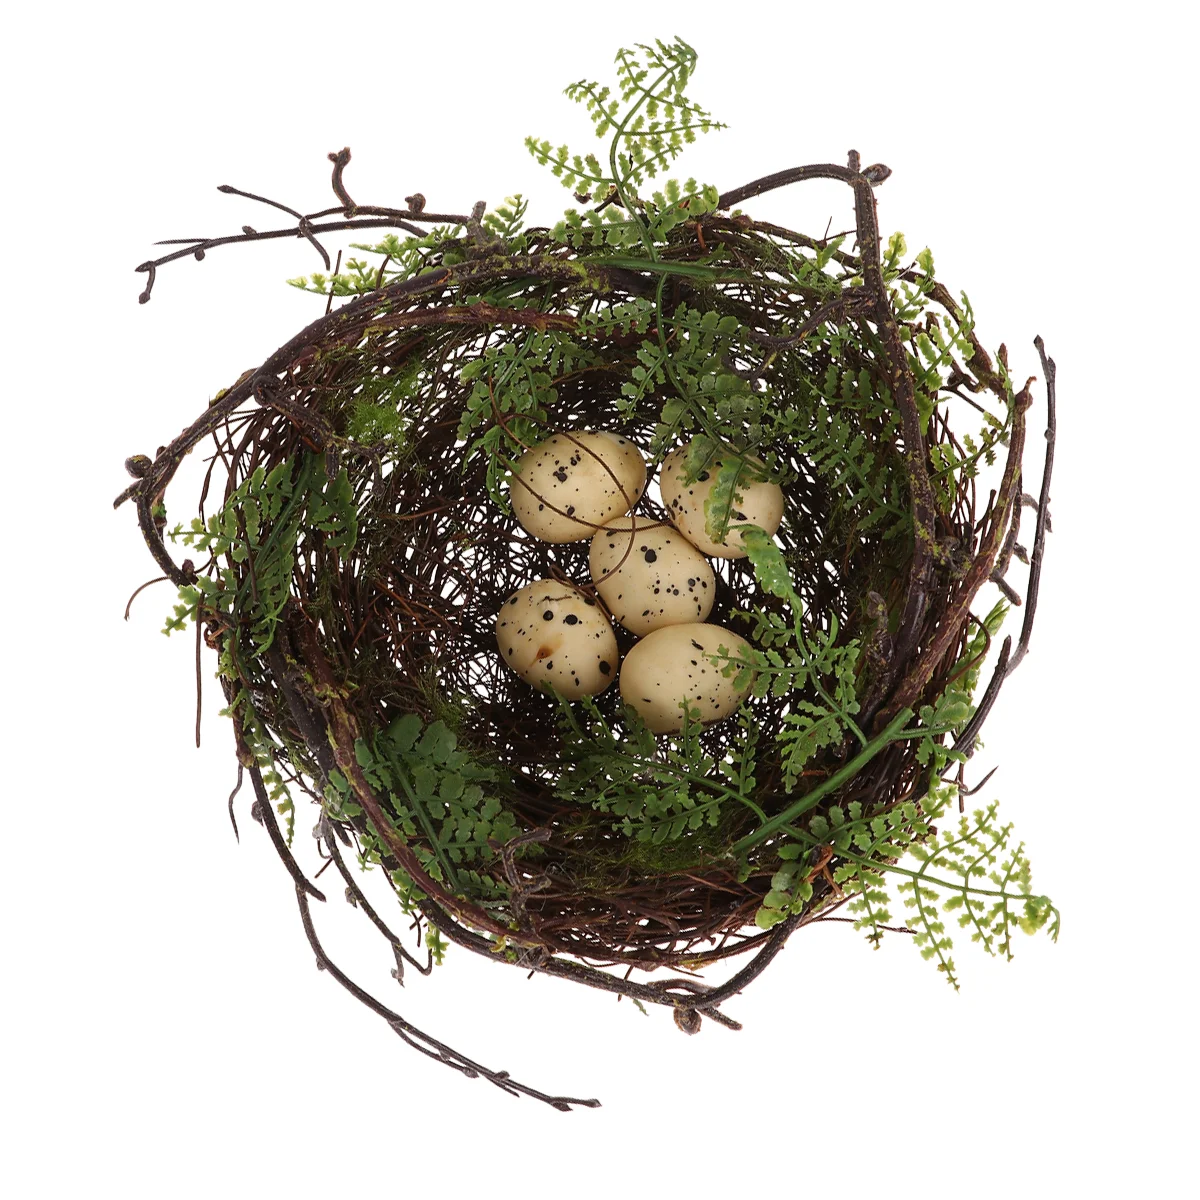 

1 Set 20cm Artificial Bird Nests Artificial Bird Nest with Artificial Bird Eggs Simulation Twig Bird Nest With Spotted Eggs